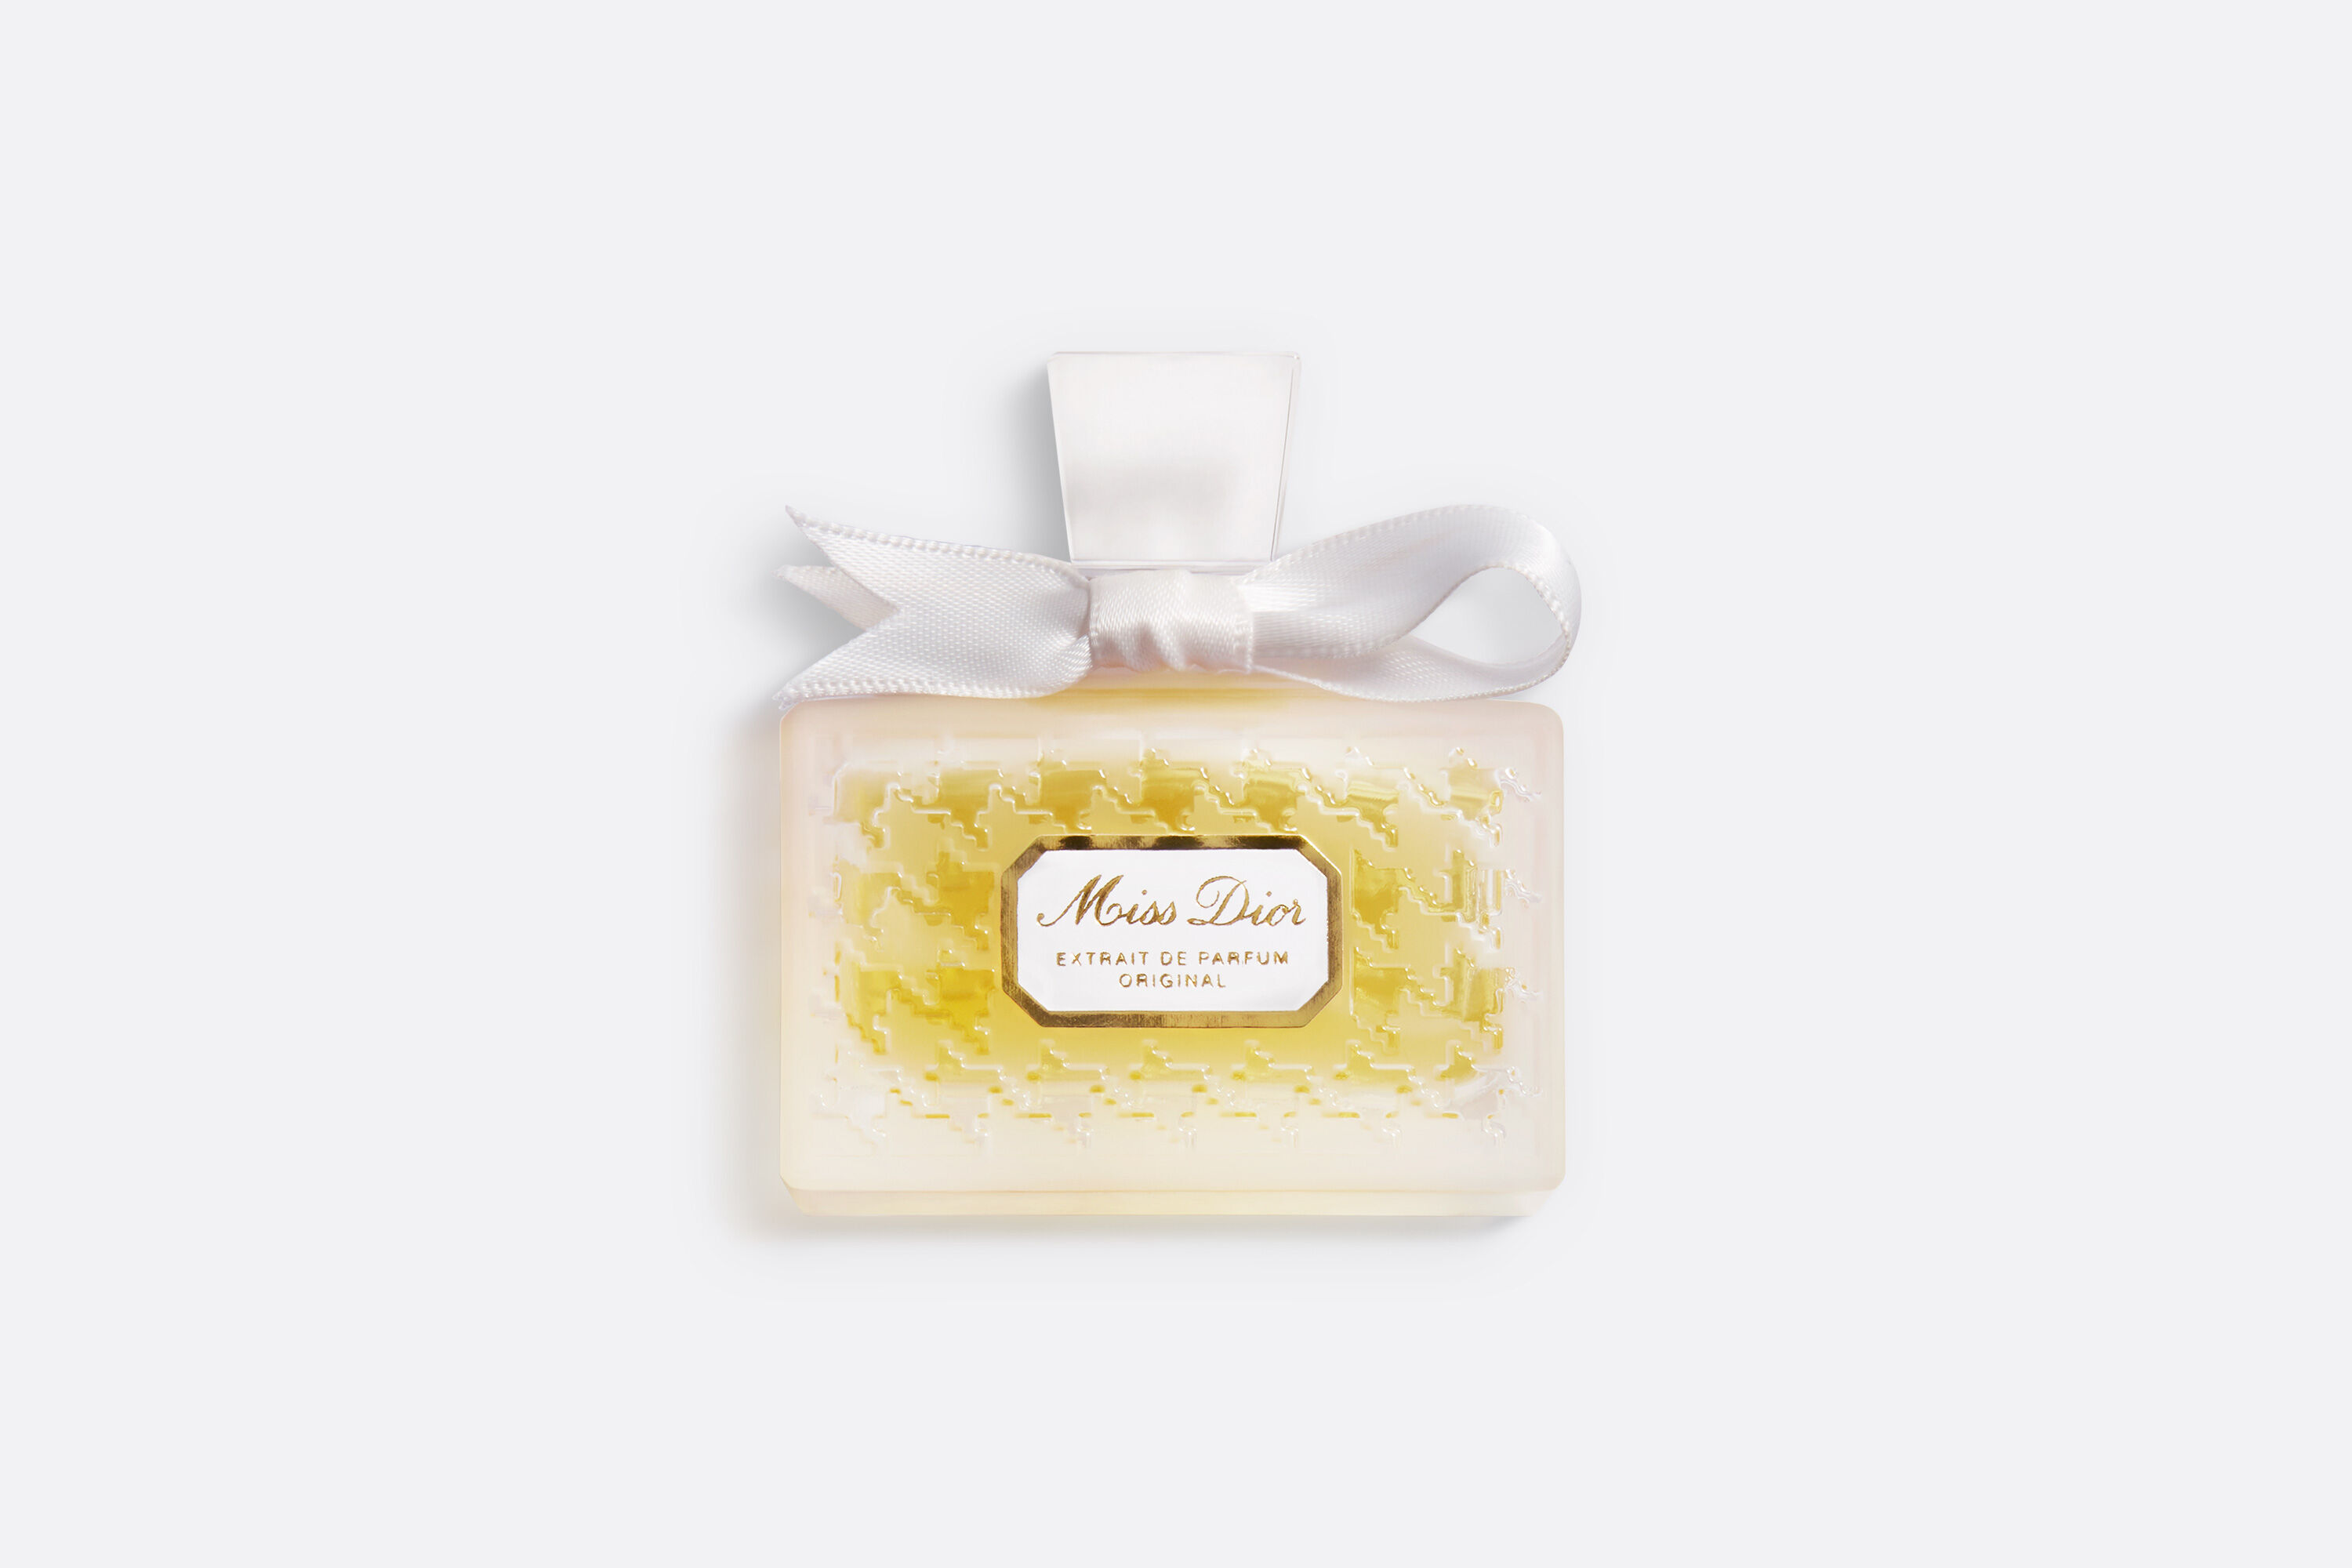 Annoteren lila weer Miss Dior Original Extrait de parfum - Women's Fragrance - Men's Fragrance  | DIOR